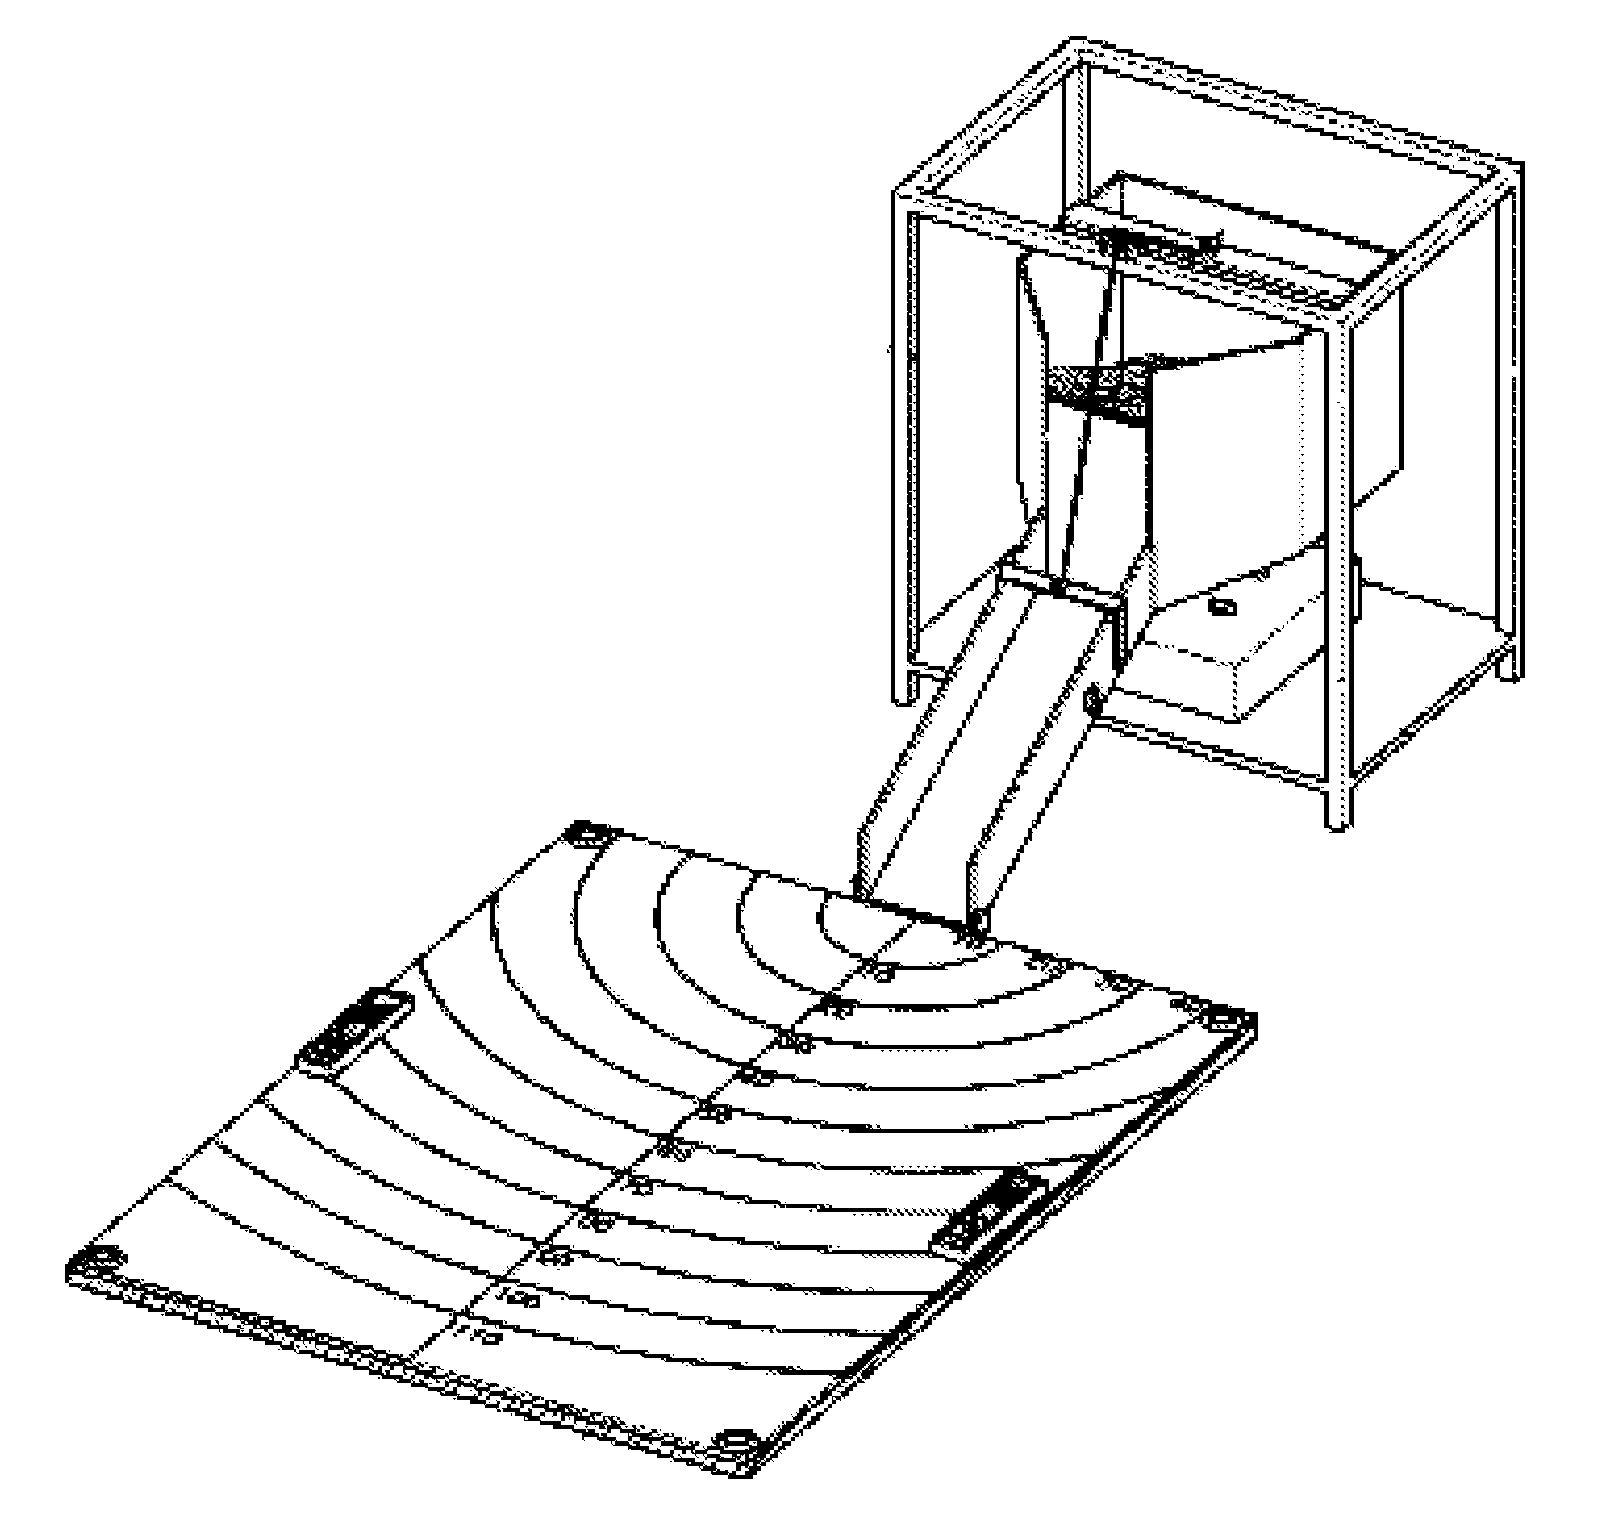 Hydroplaning debris-flow simulation apparatus